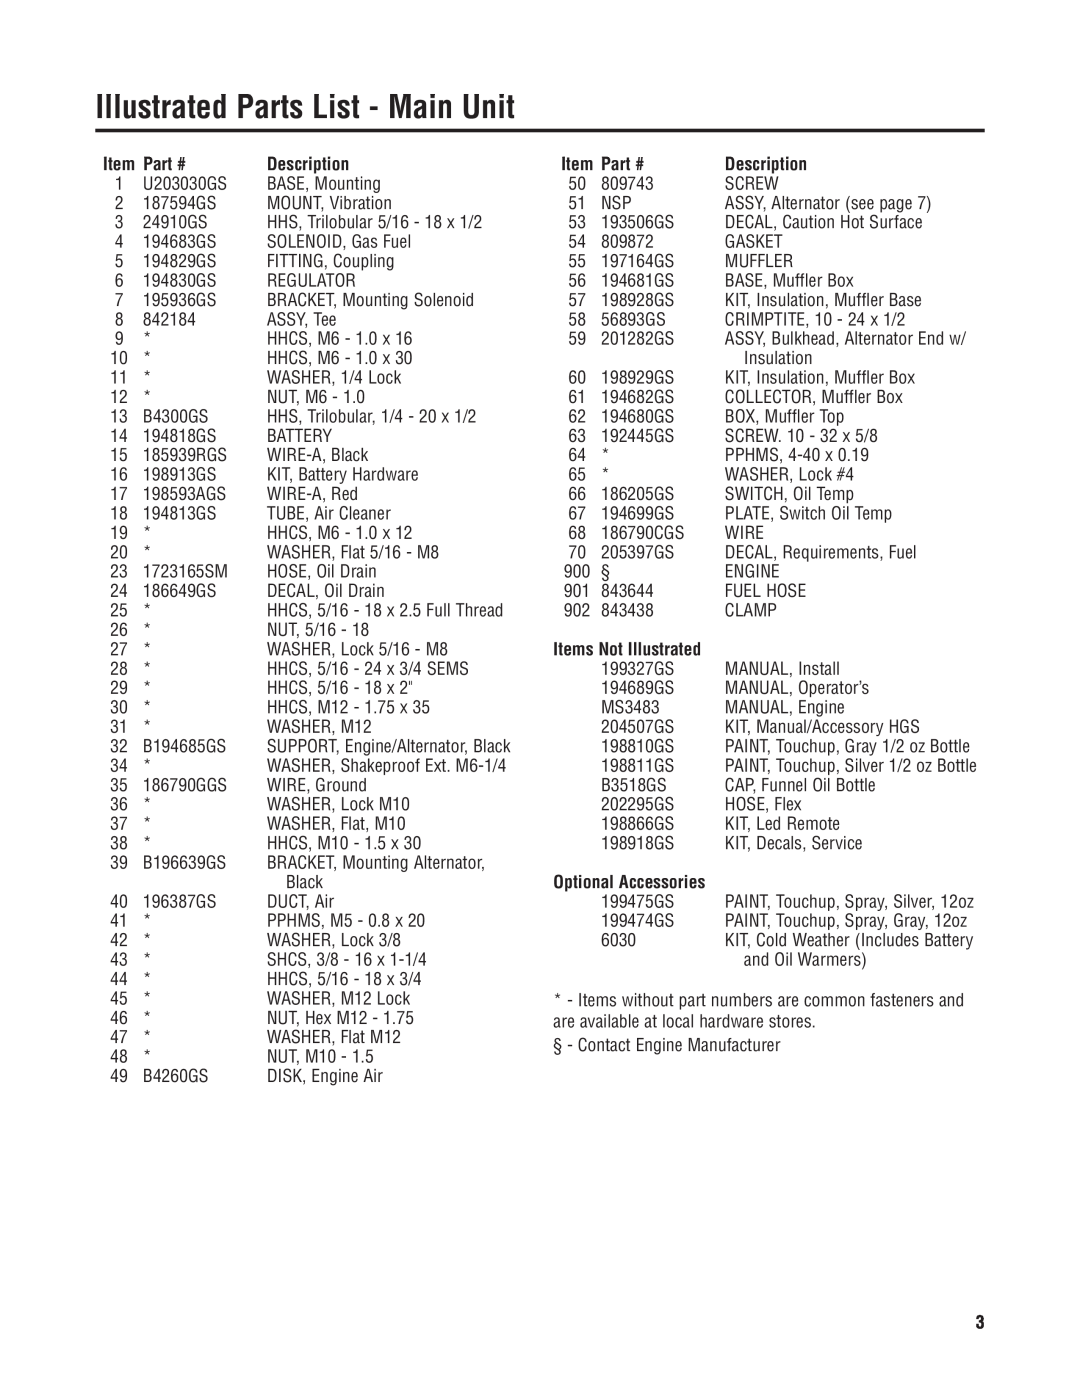 Briggs & Stratton 040210-1 manual Illustrated Parts List - Main Unit, Description, Items Not Illustrated 